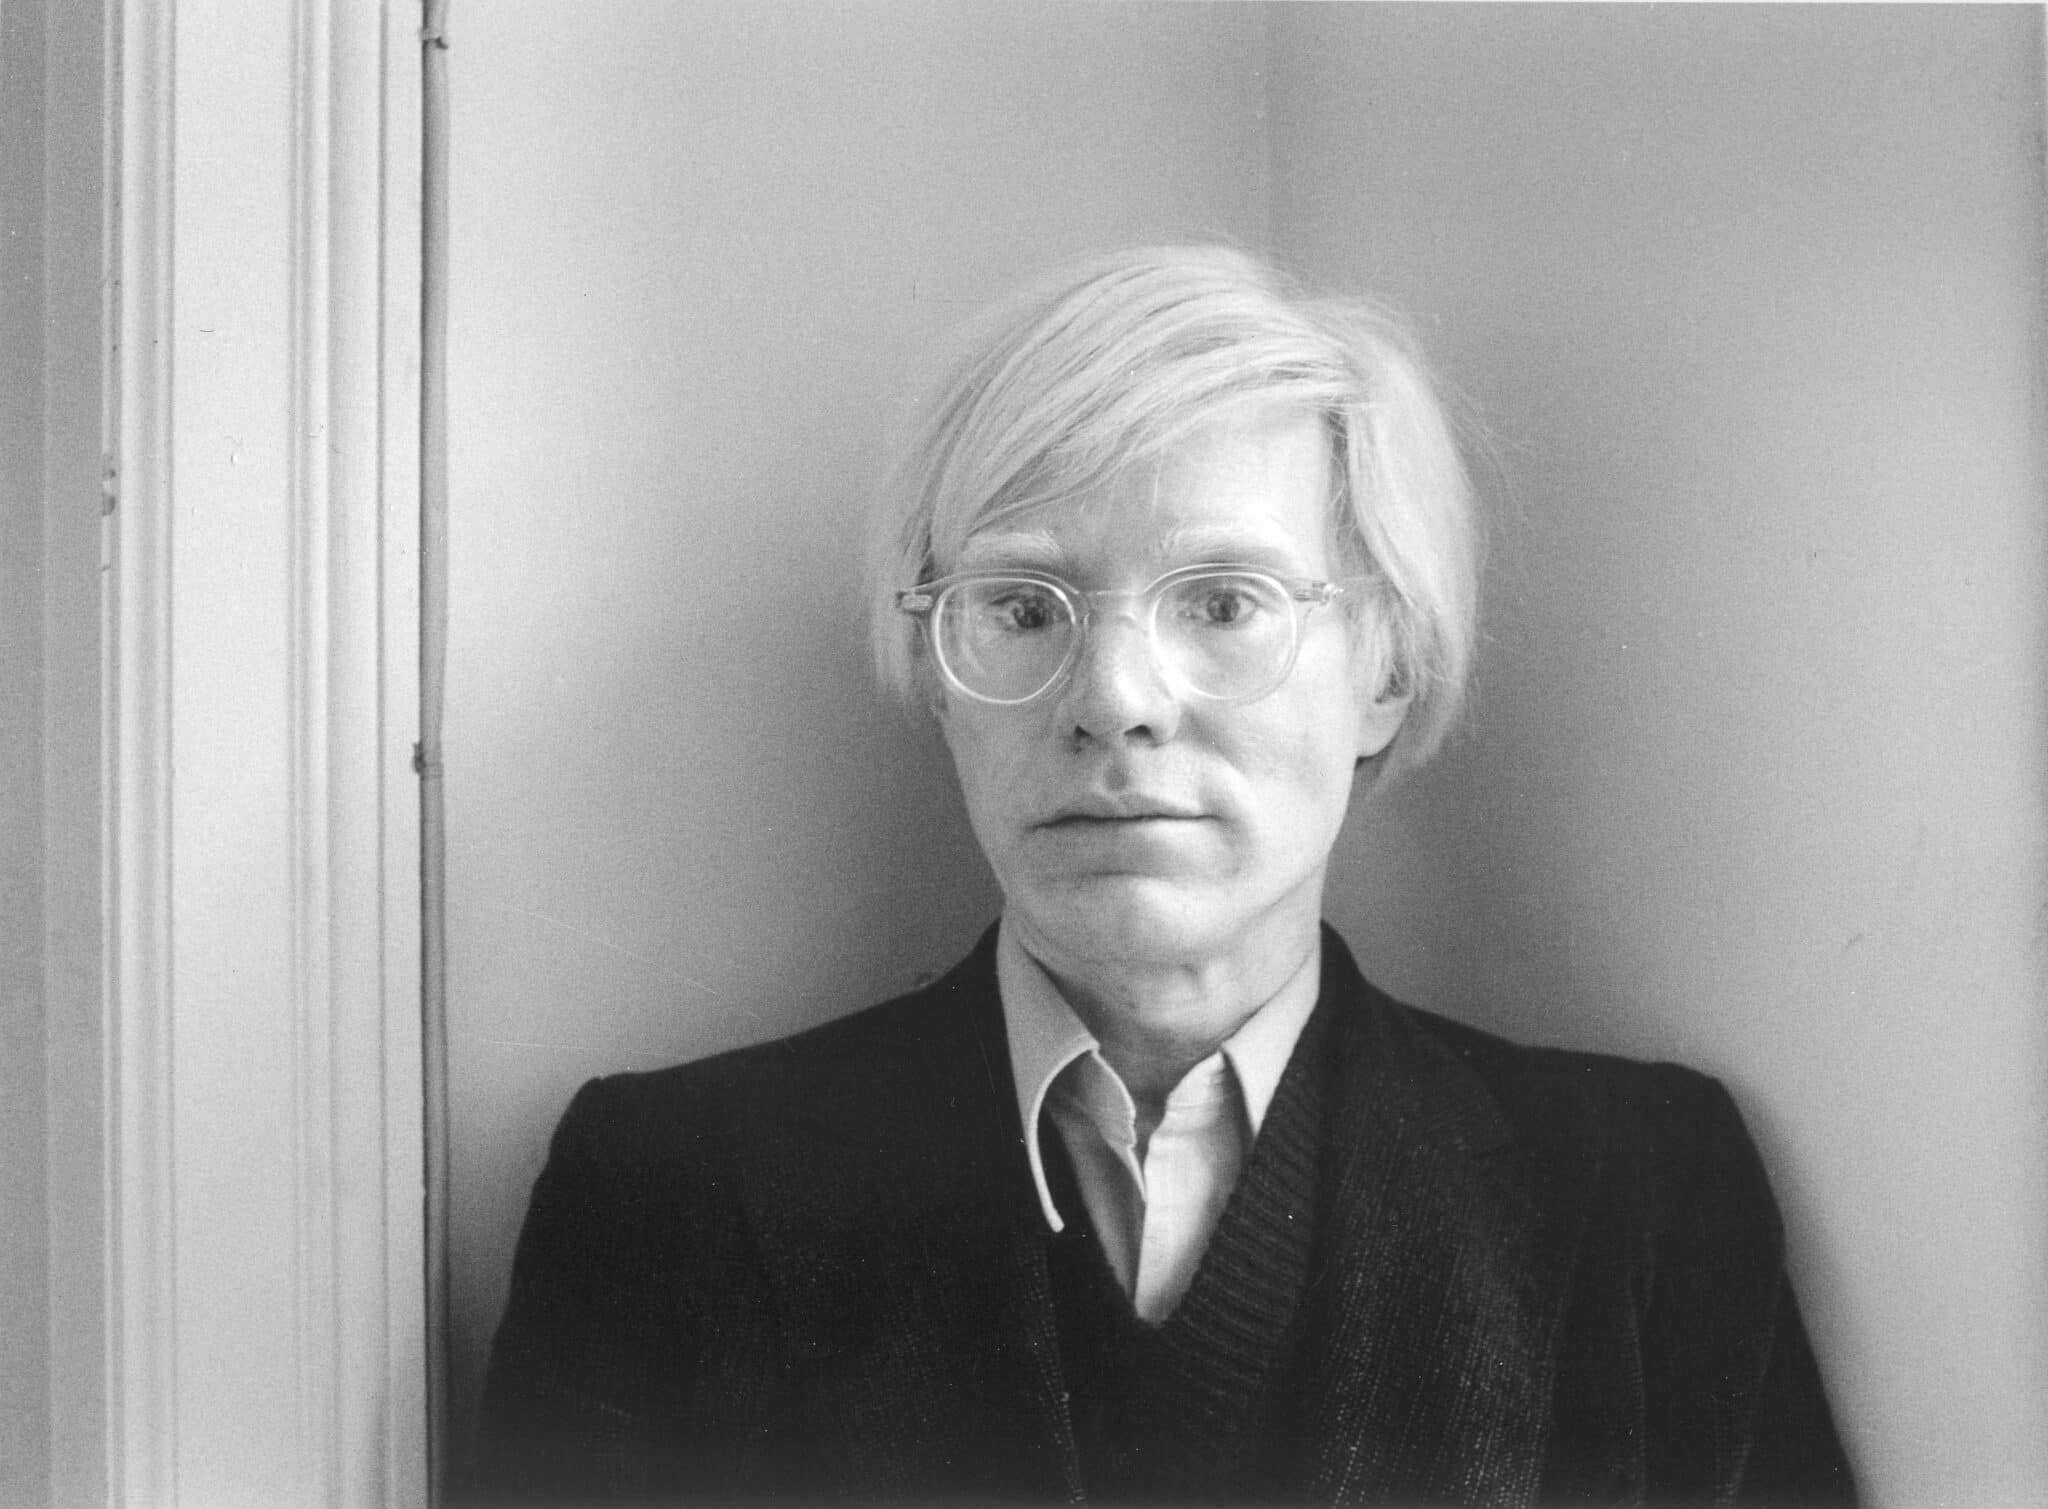 Image : Bernhard Giger, Andy Warhol, New York, 1974